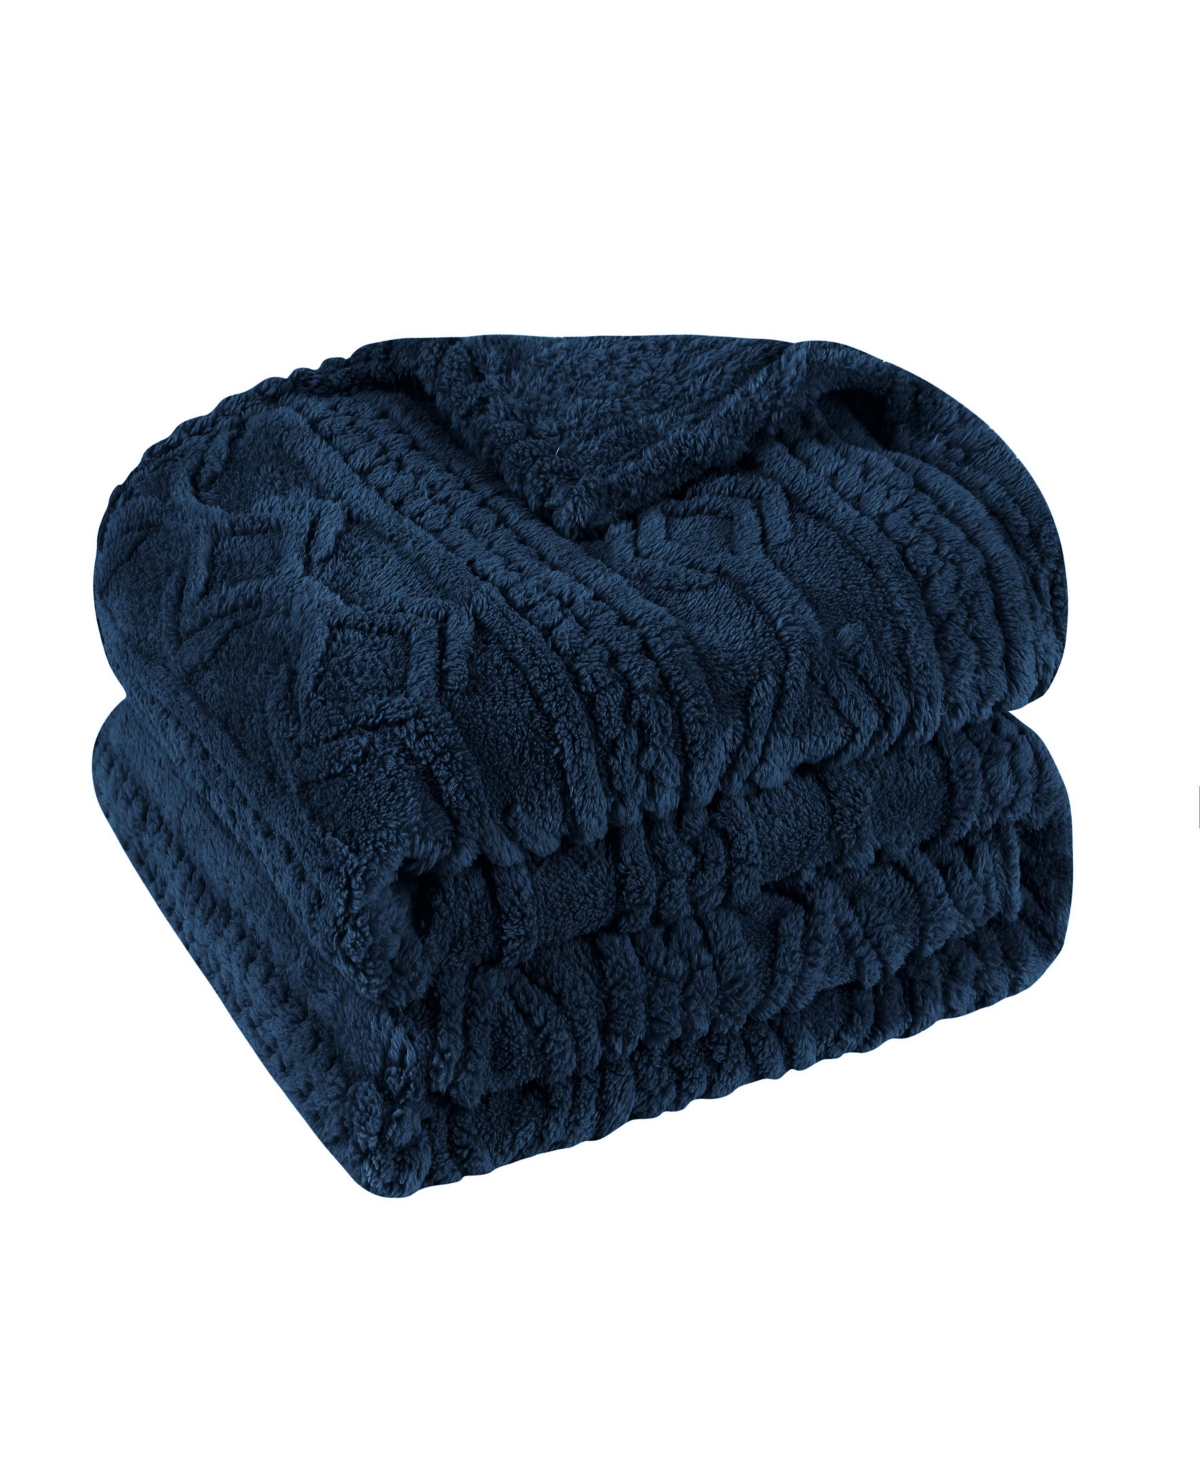 Superior Boho Knit Jacquard Fleece Plush Fluffy Blanket, King In Navy Blue